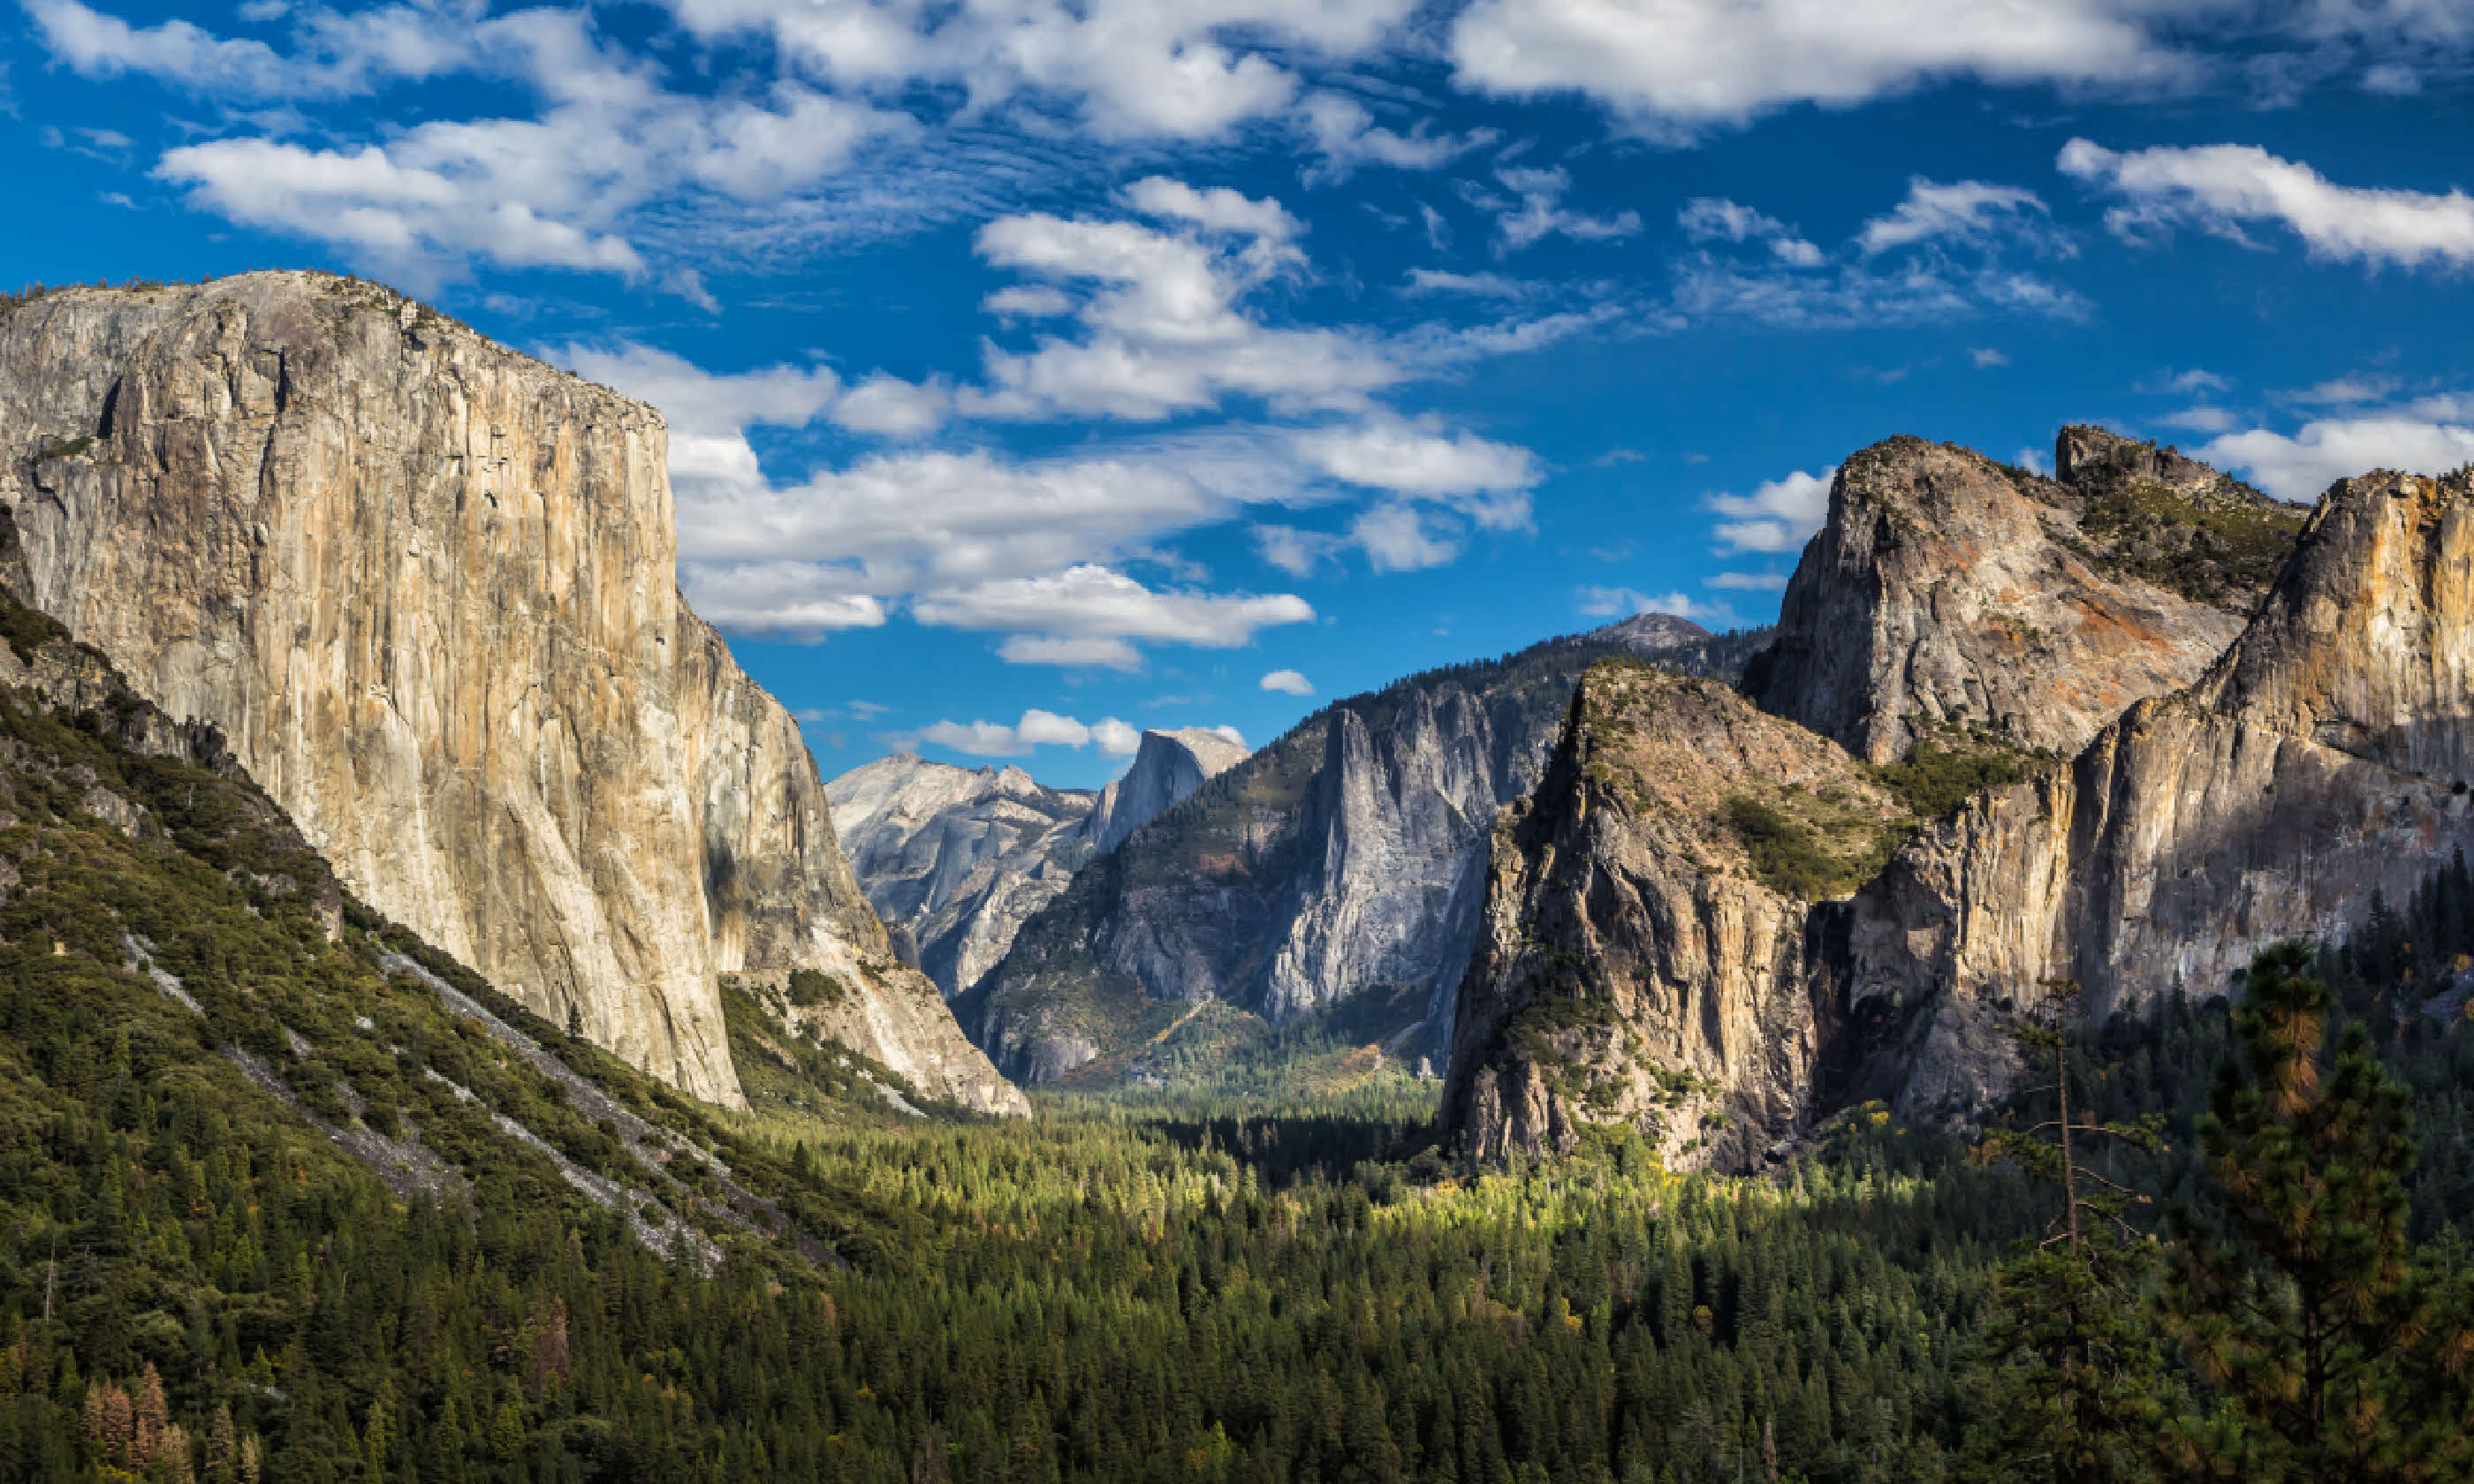  Yosemite National Park Valley (Shutterstock)